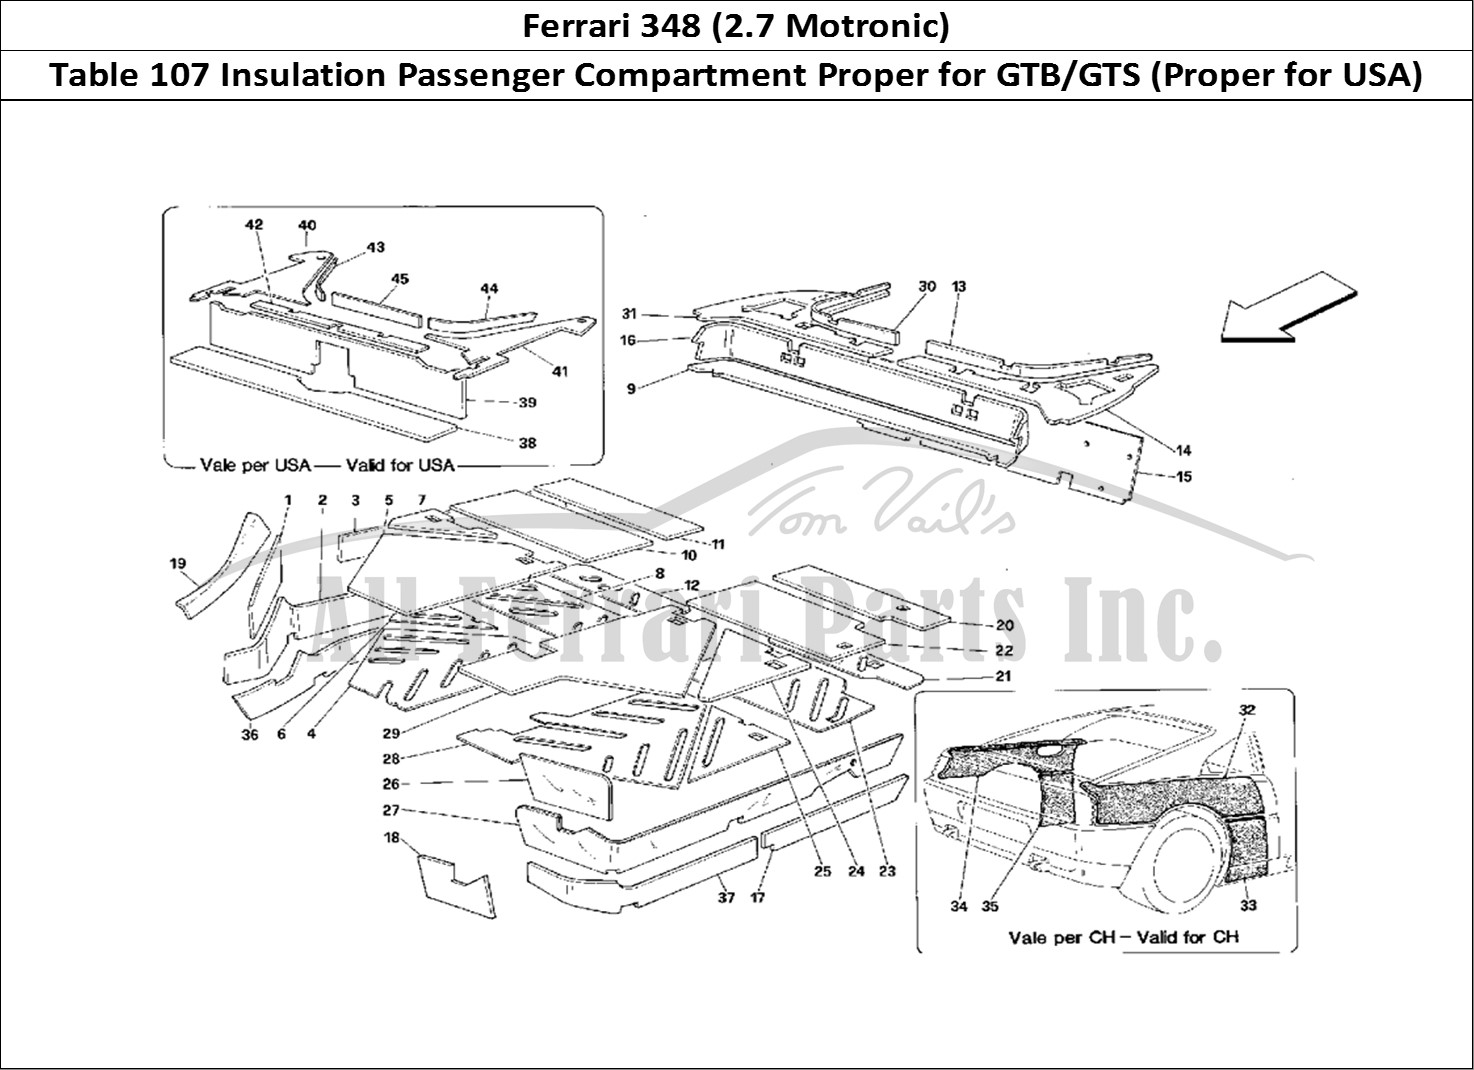 Buy original Ferrari 348 (2.7 Motronic) 107 Insulation Passenger  Compartment Proper for GTB/GTS (Proper for USA) Ferrari parts, spares,  accessories online